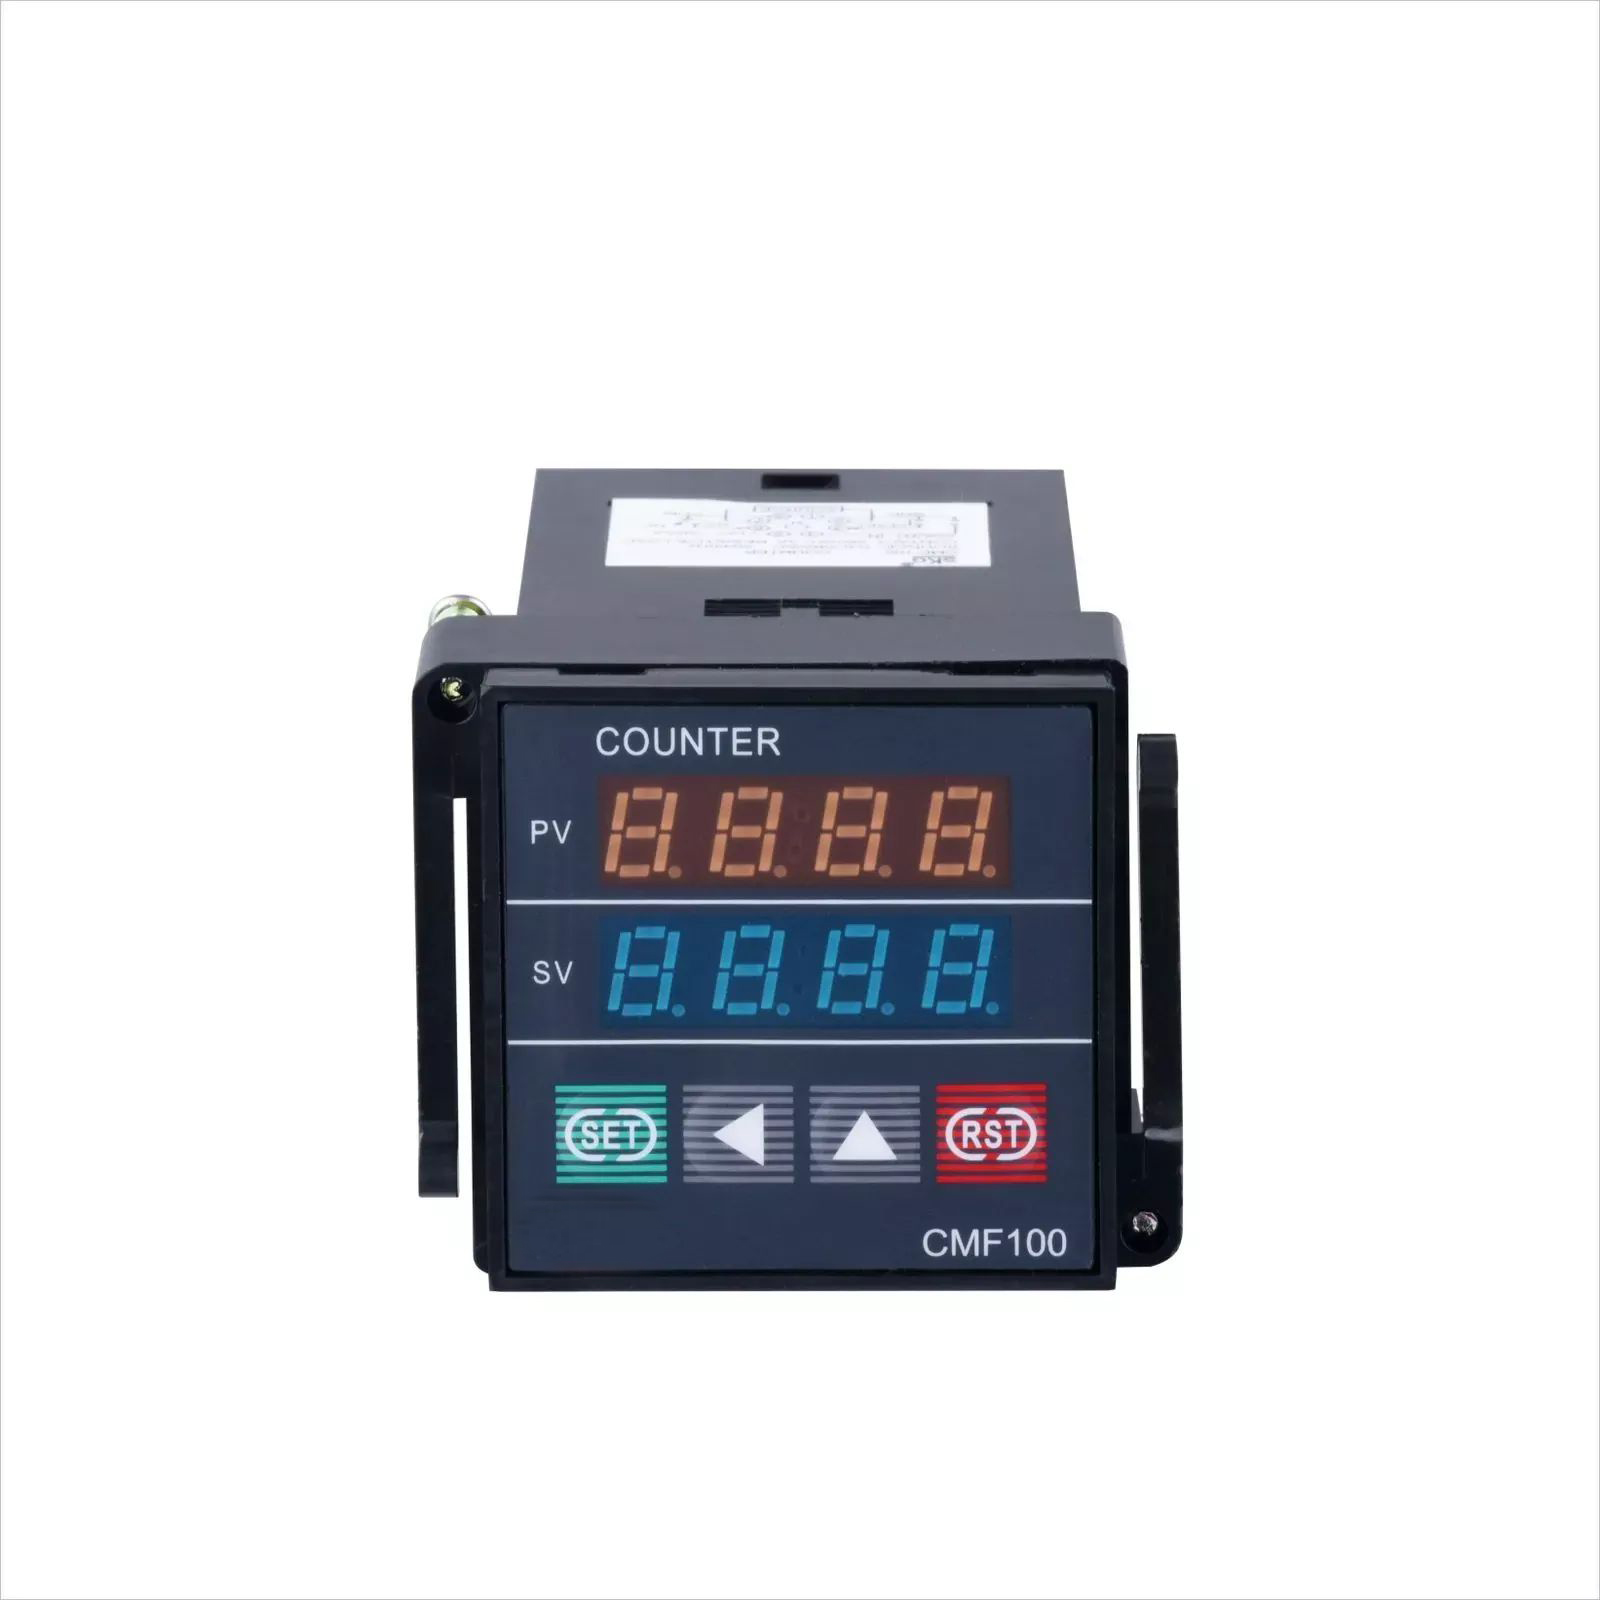 Vacorda CMF100 digital length counter meter with sensor